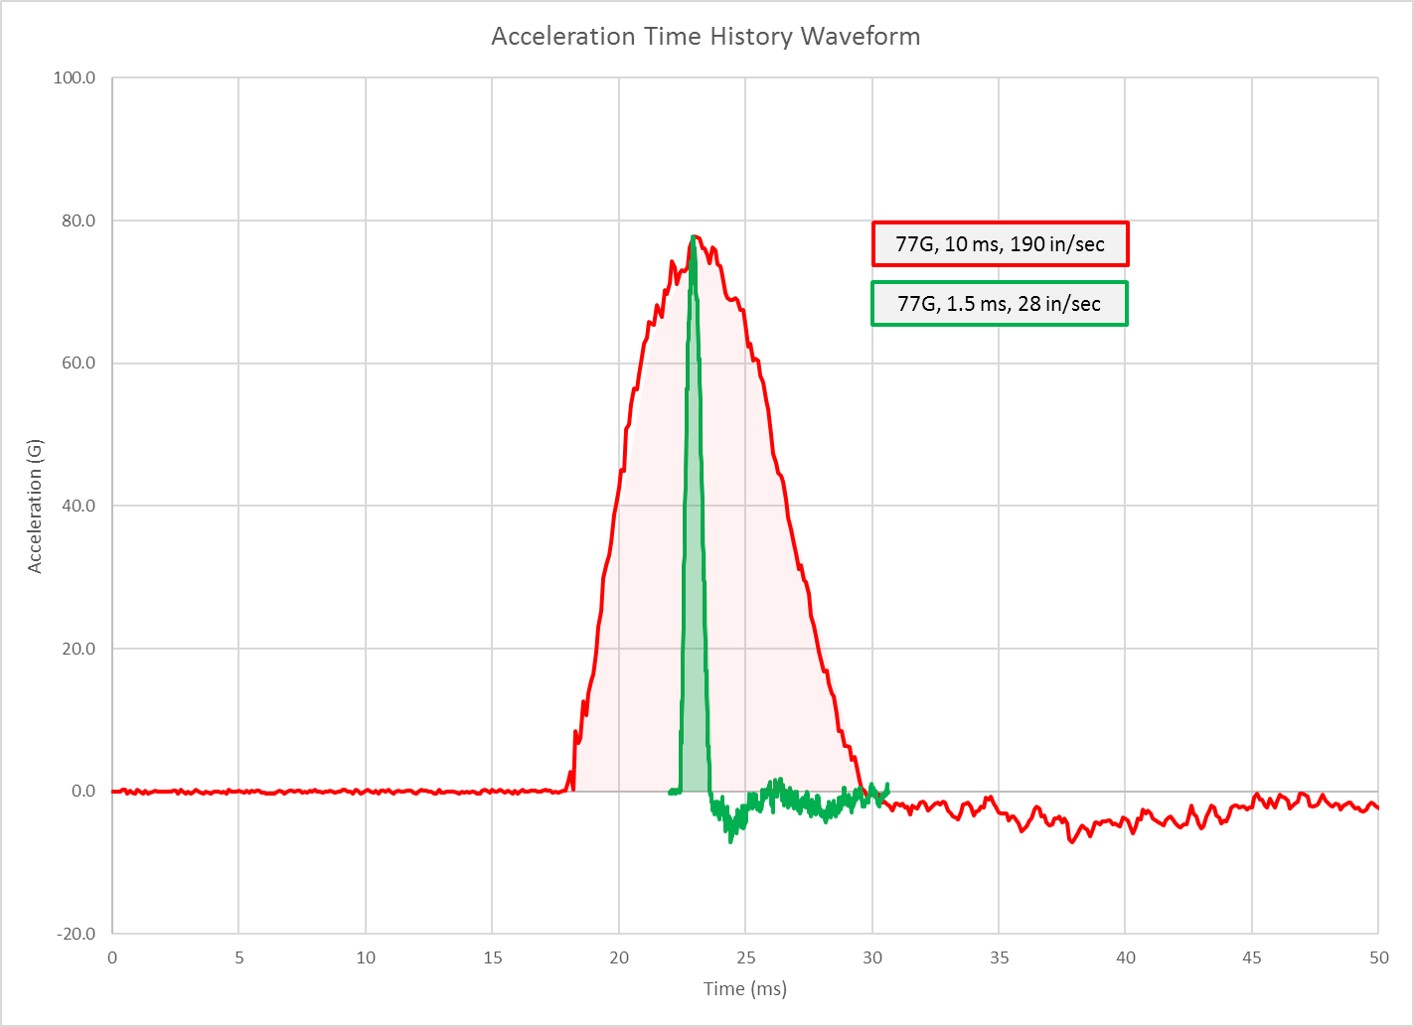 Acceleration Time History Waveform - 77G, 1.5ms, 28 in/sec.